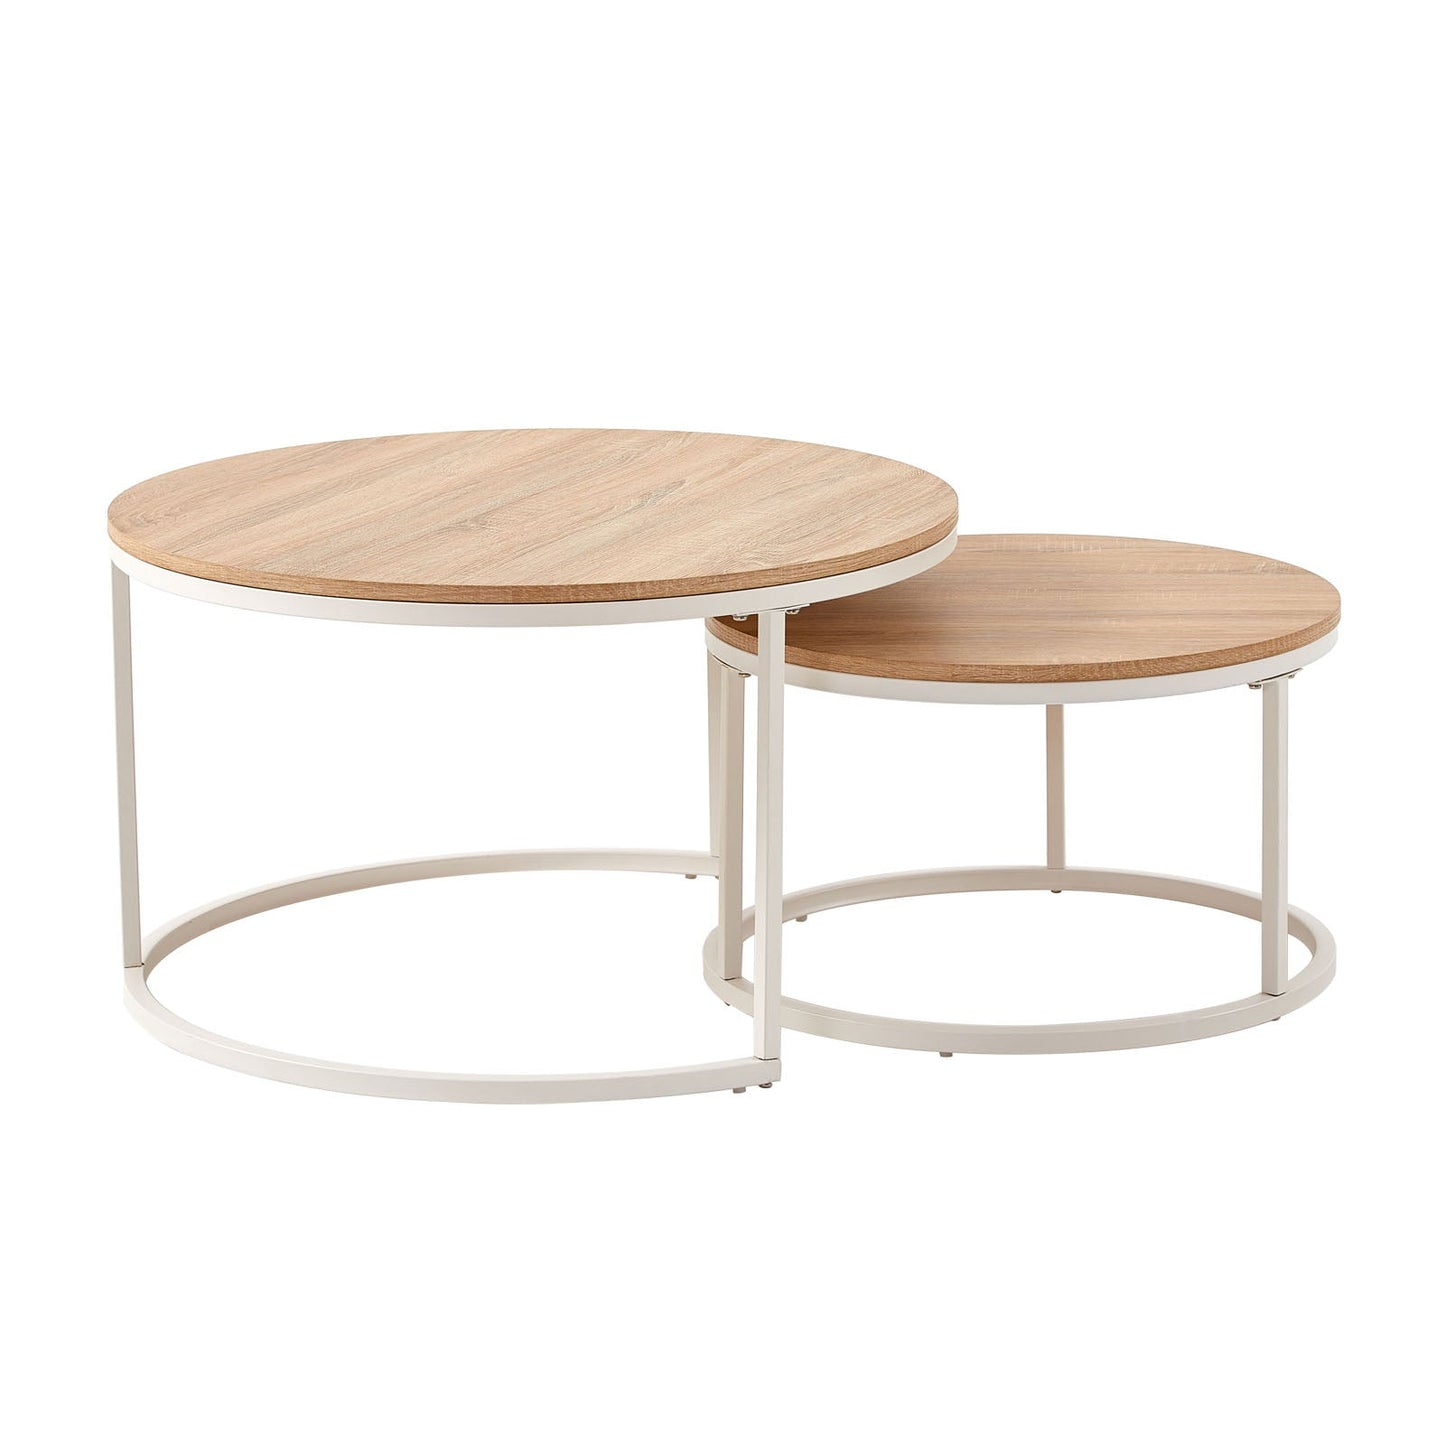 CARB Set of 2 Iron Frame Coffee Tables - Oak Φ80 * 45cm / Φ60 * 35cm - Light Brown